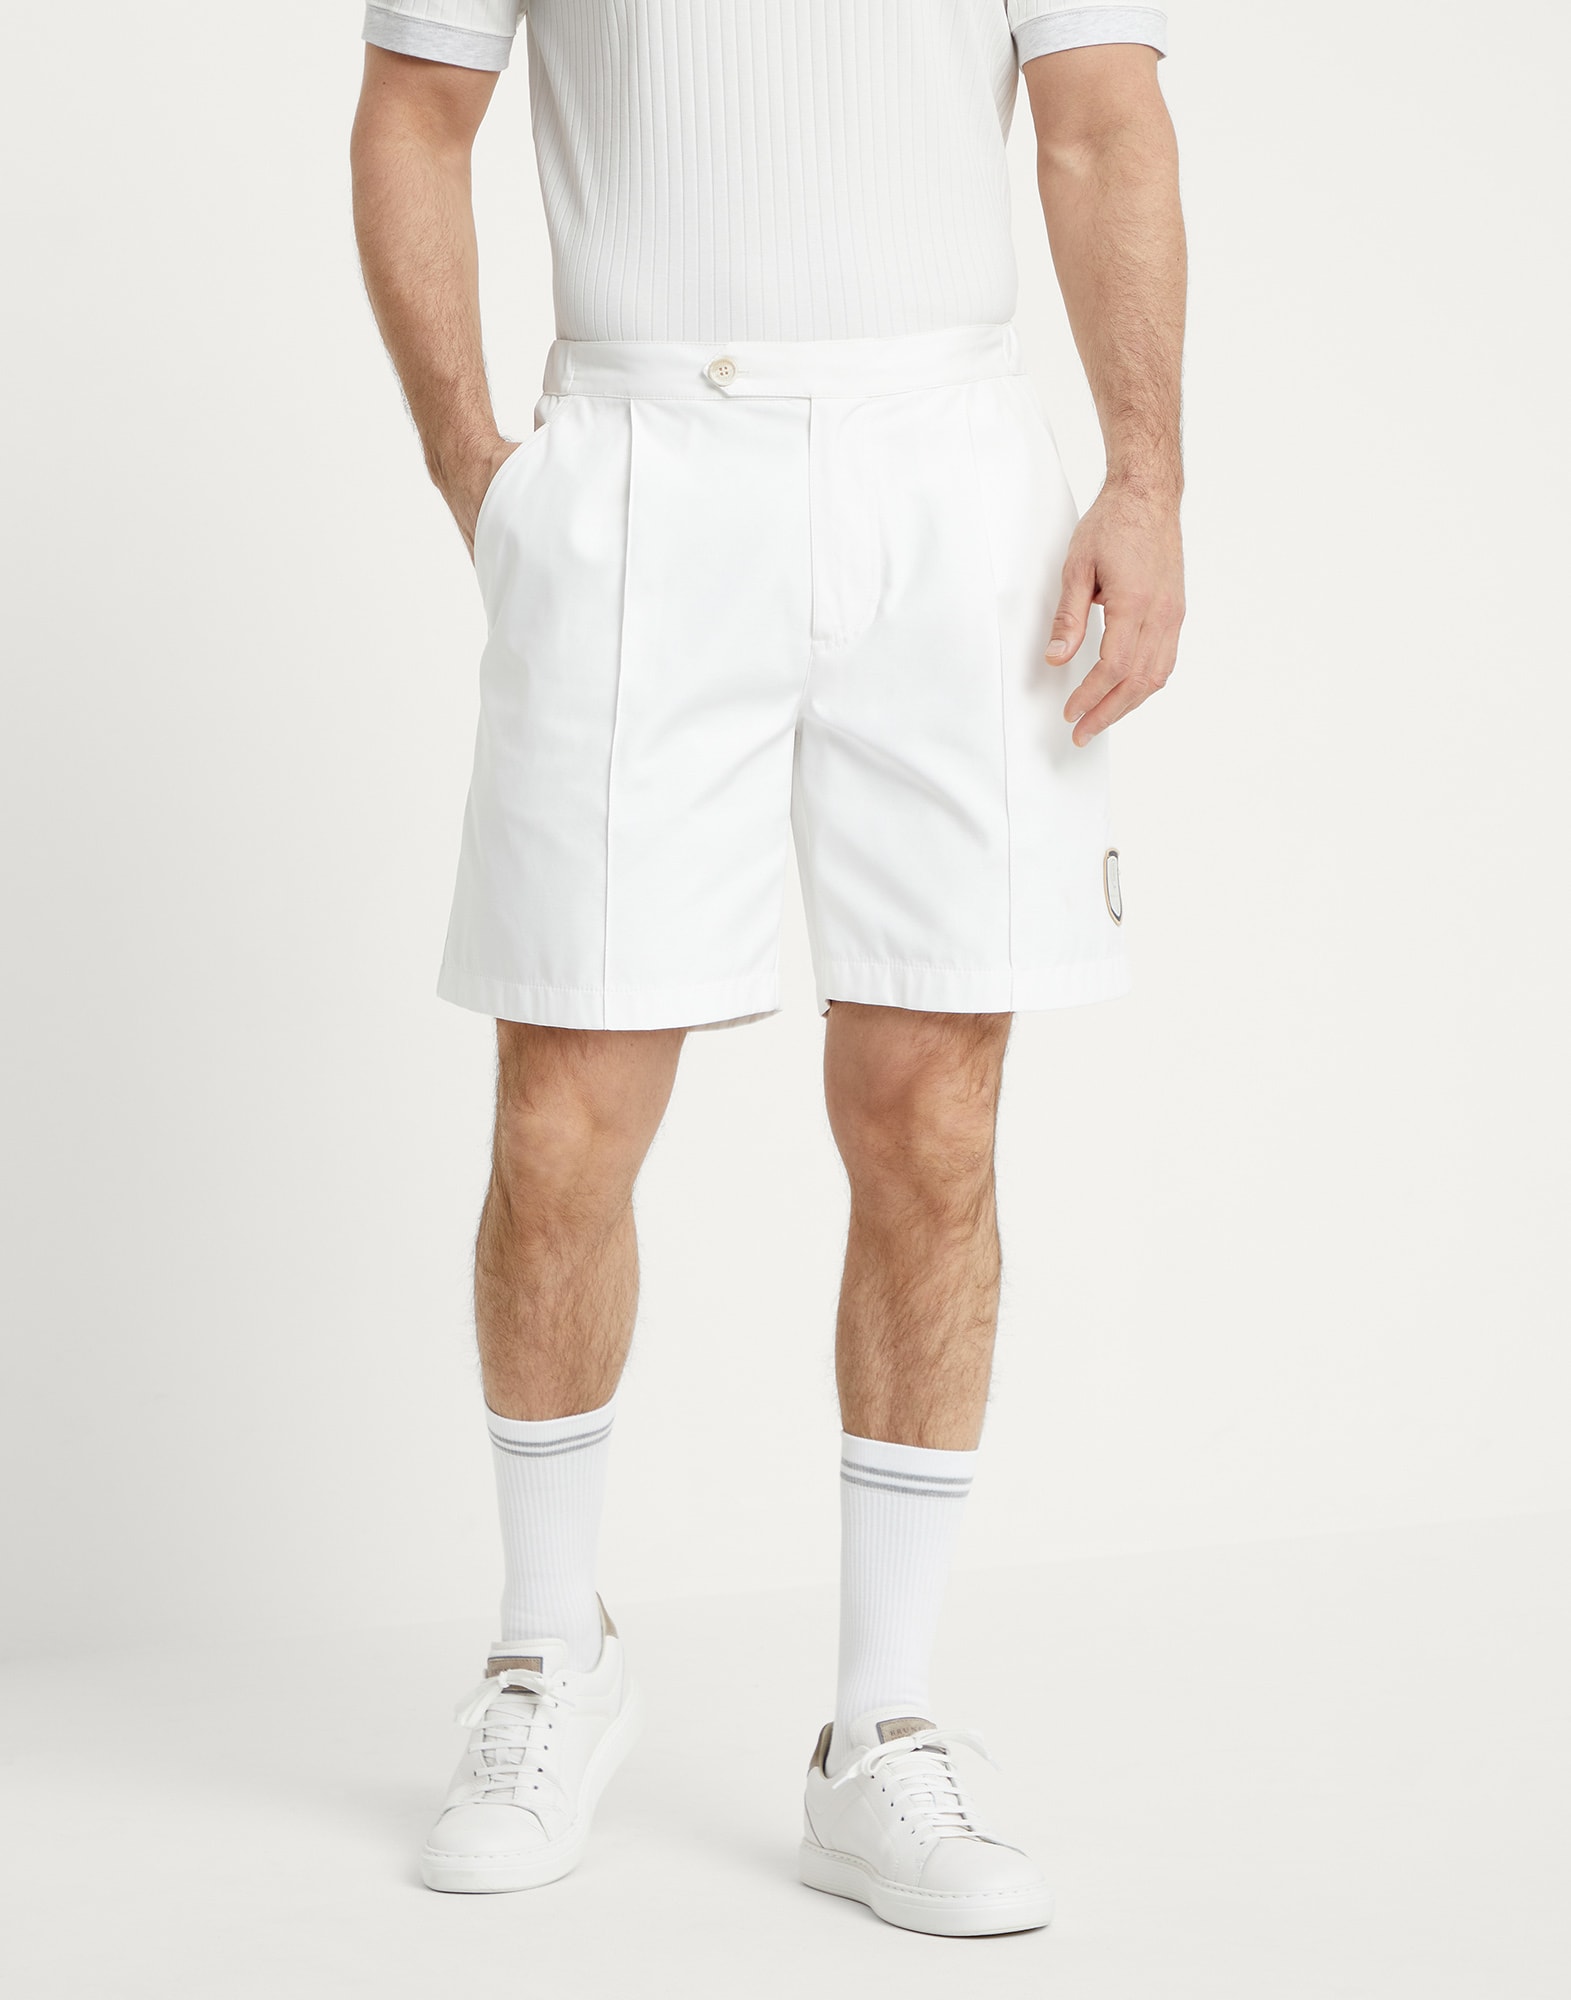 Bermuda shorts with Tennis badge